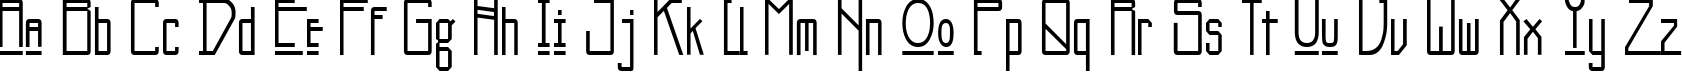 Пример написания английского алфавита шрифтом NewDeli